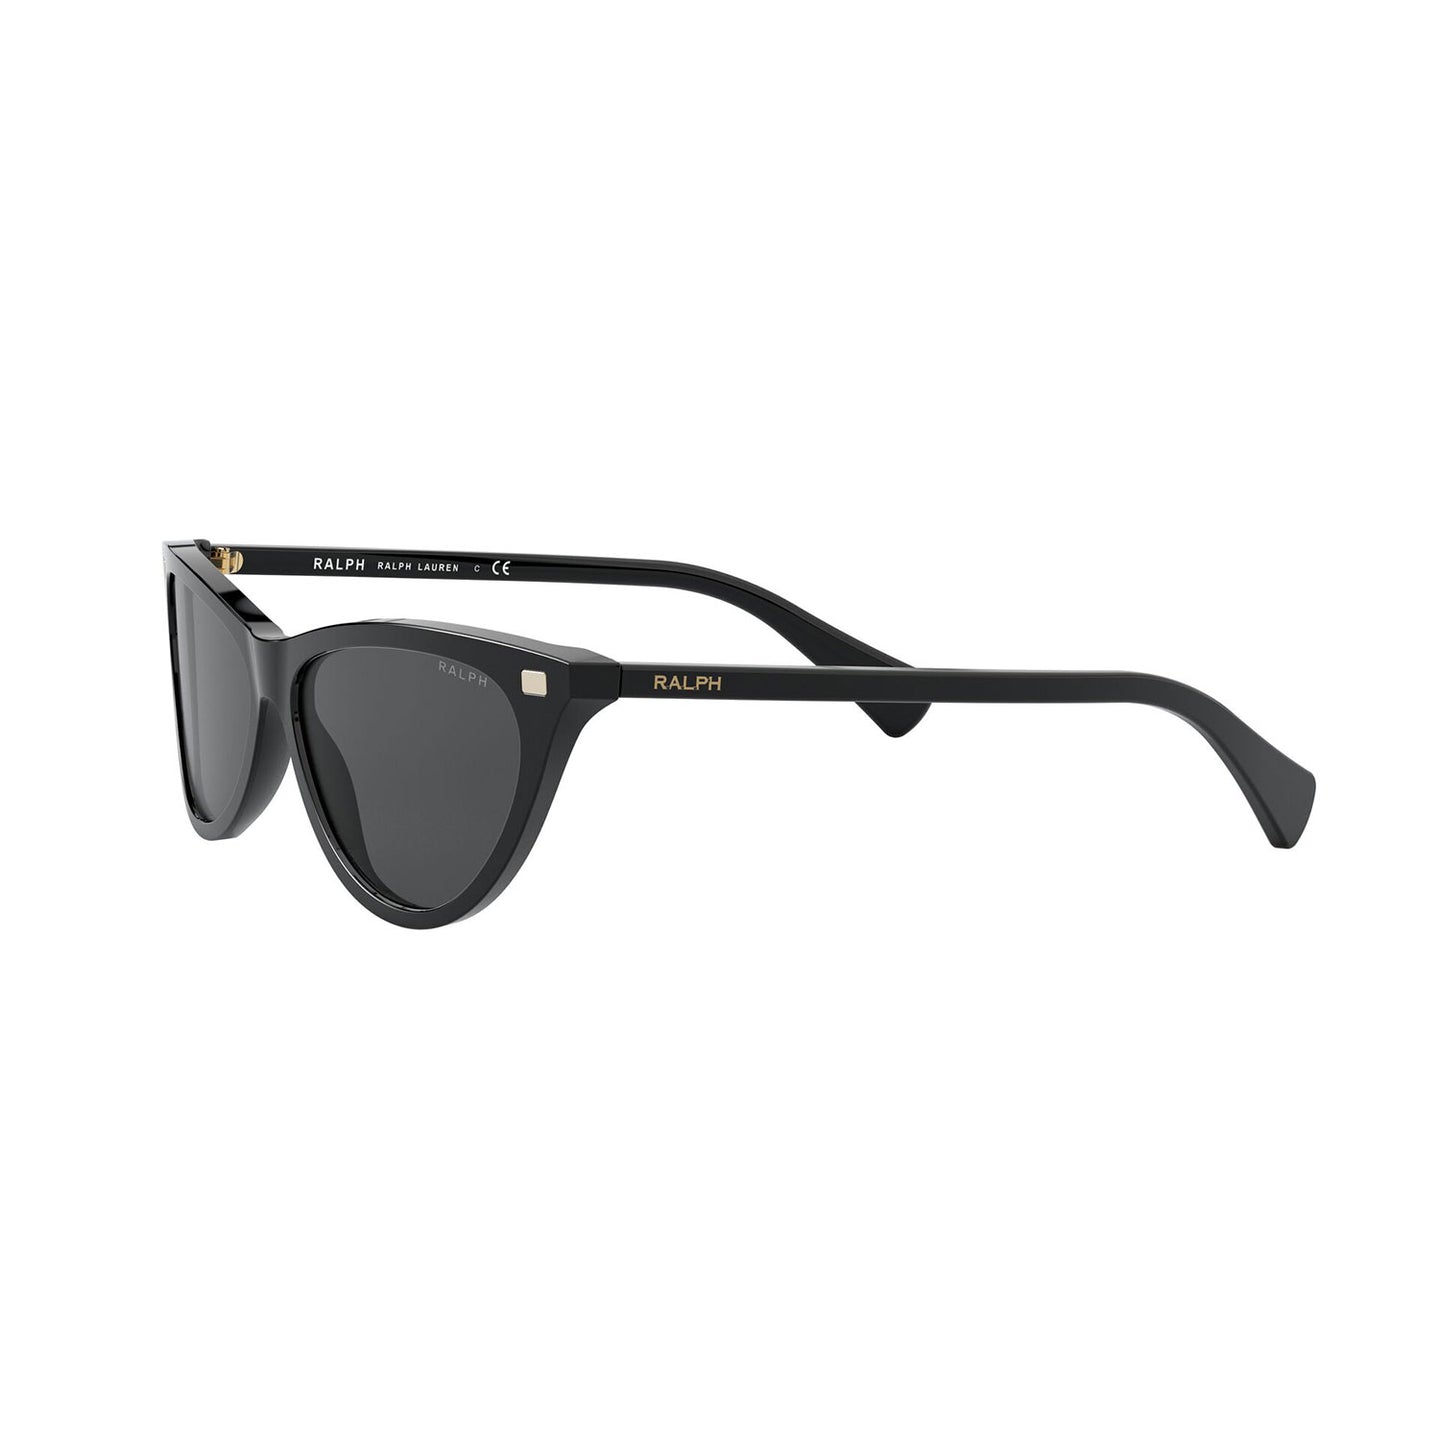 sunglasses ralph lauren model ra 5271 color 500187 shiny black 